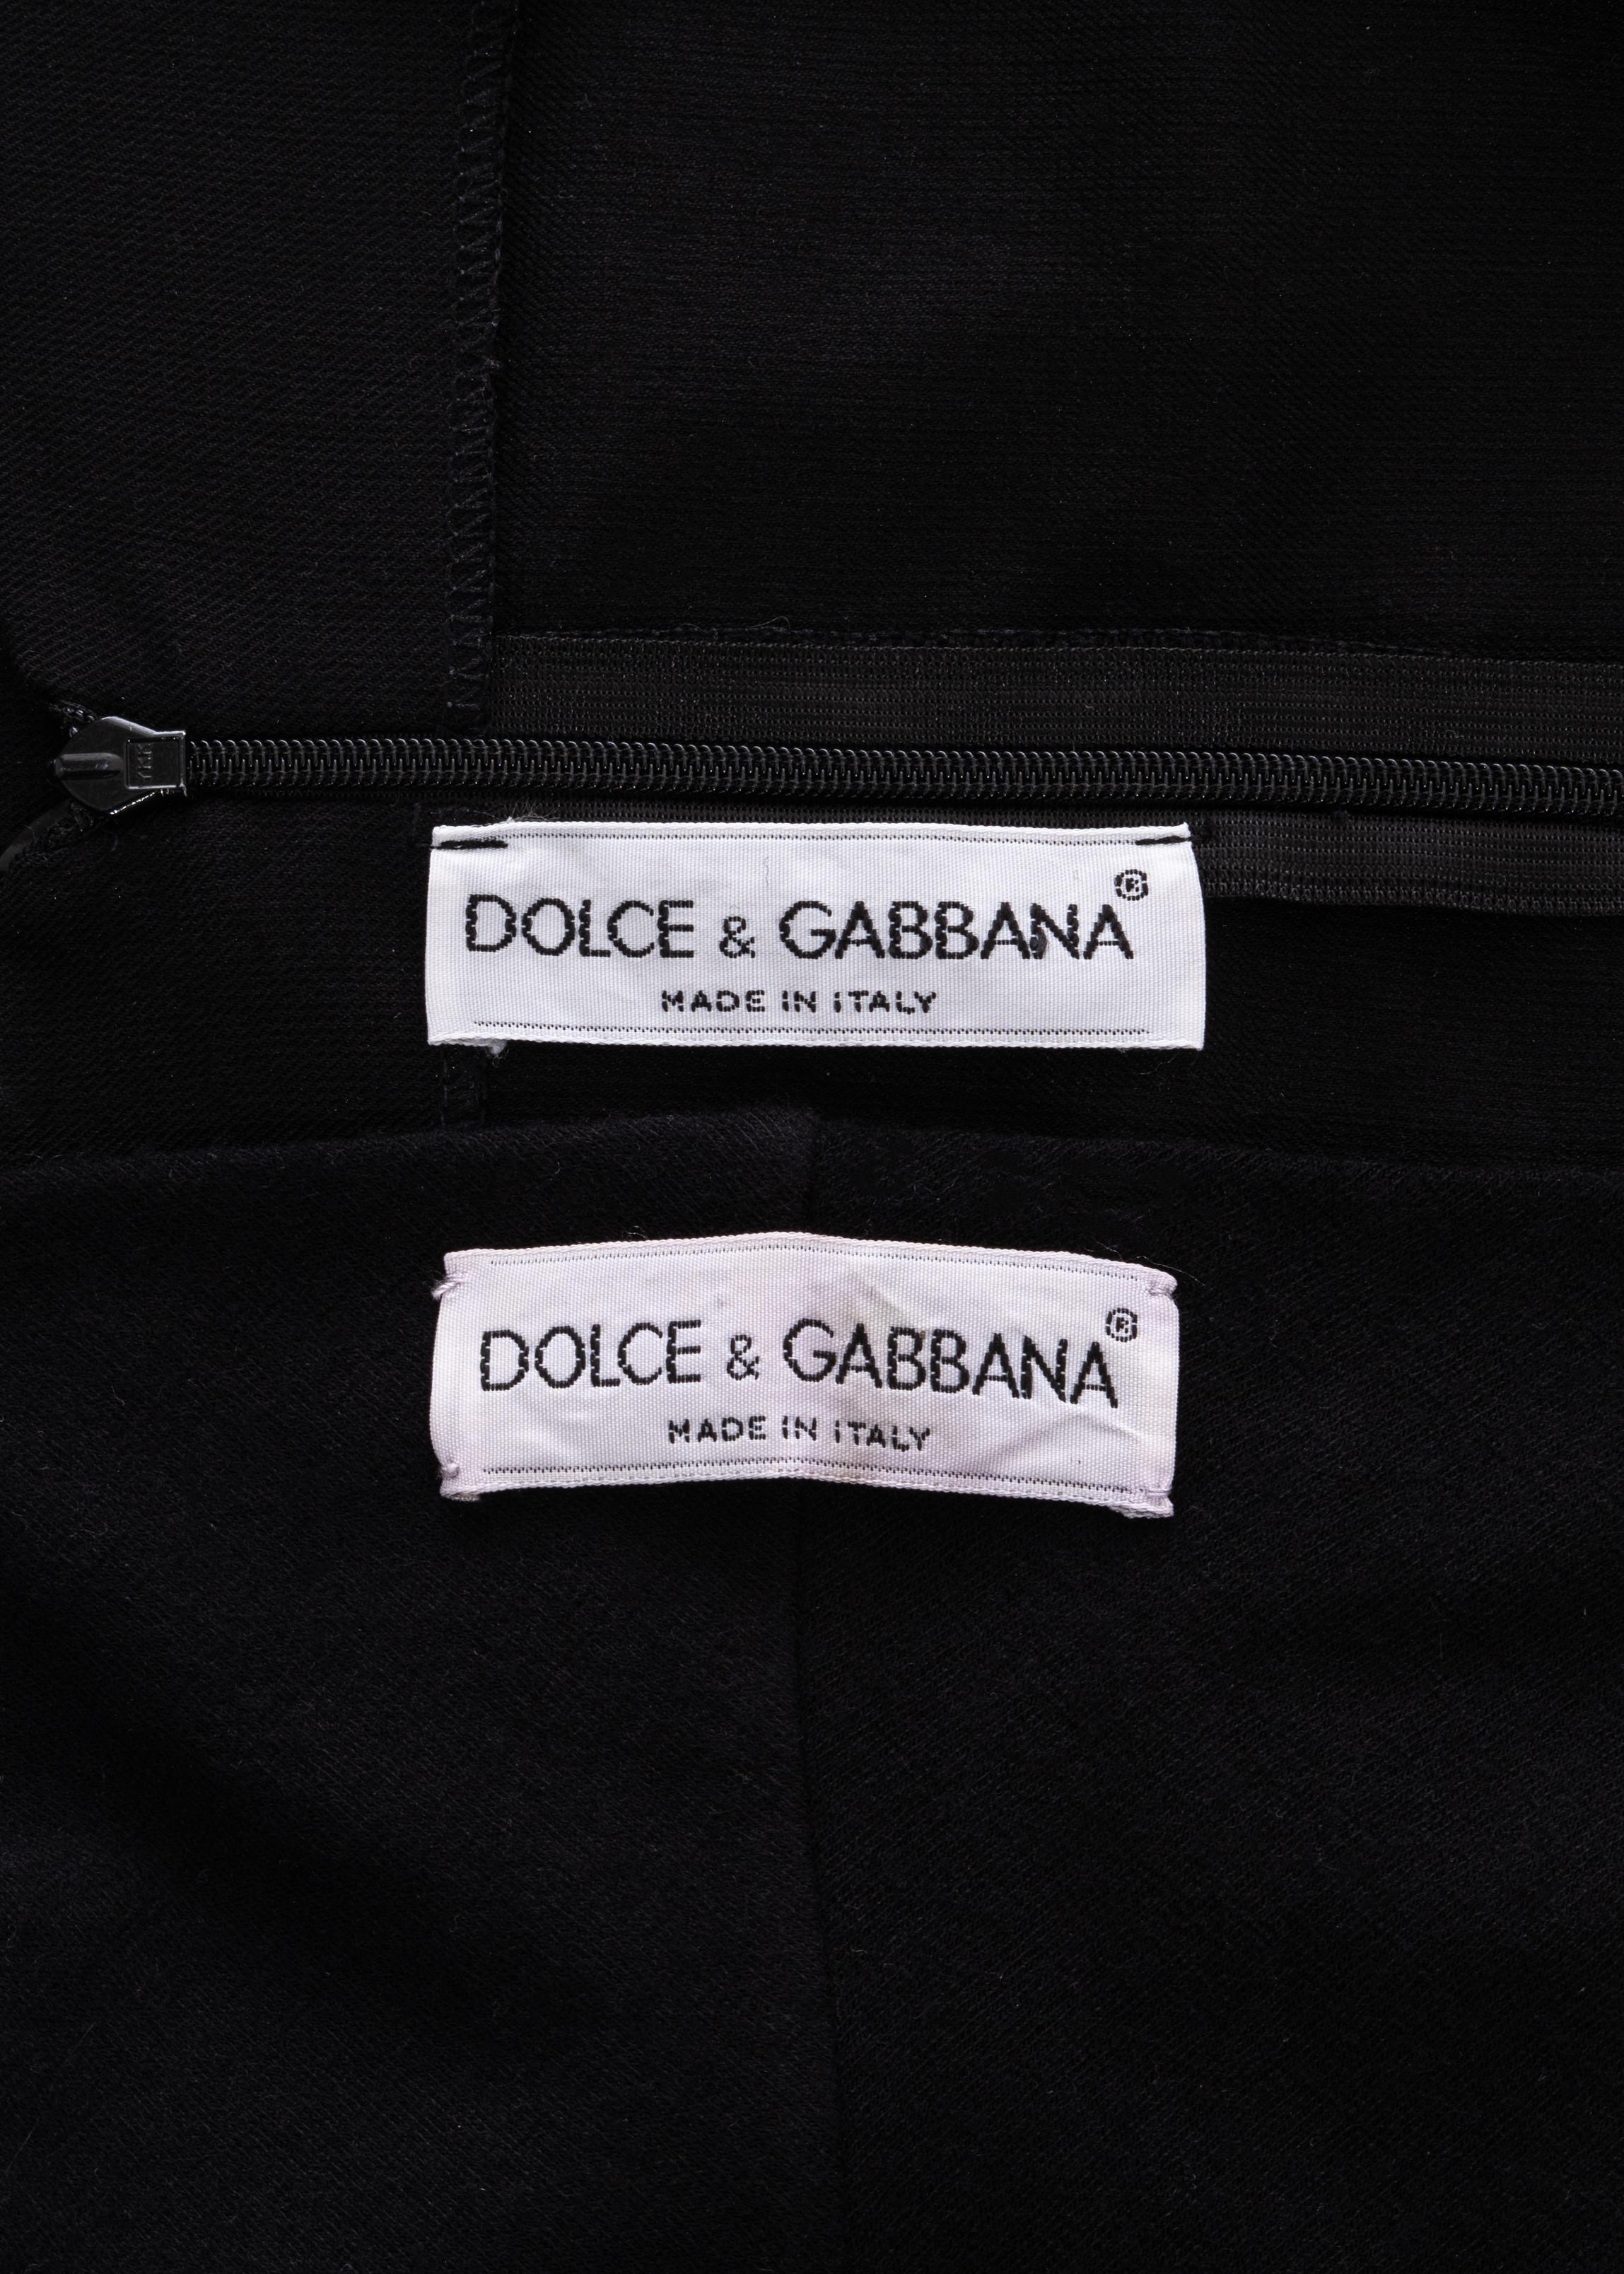 Dolce & Gabbana jewelled corset, mini skirt, shrug and gloves ensemble, fw 1991 2